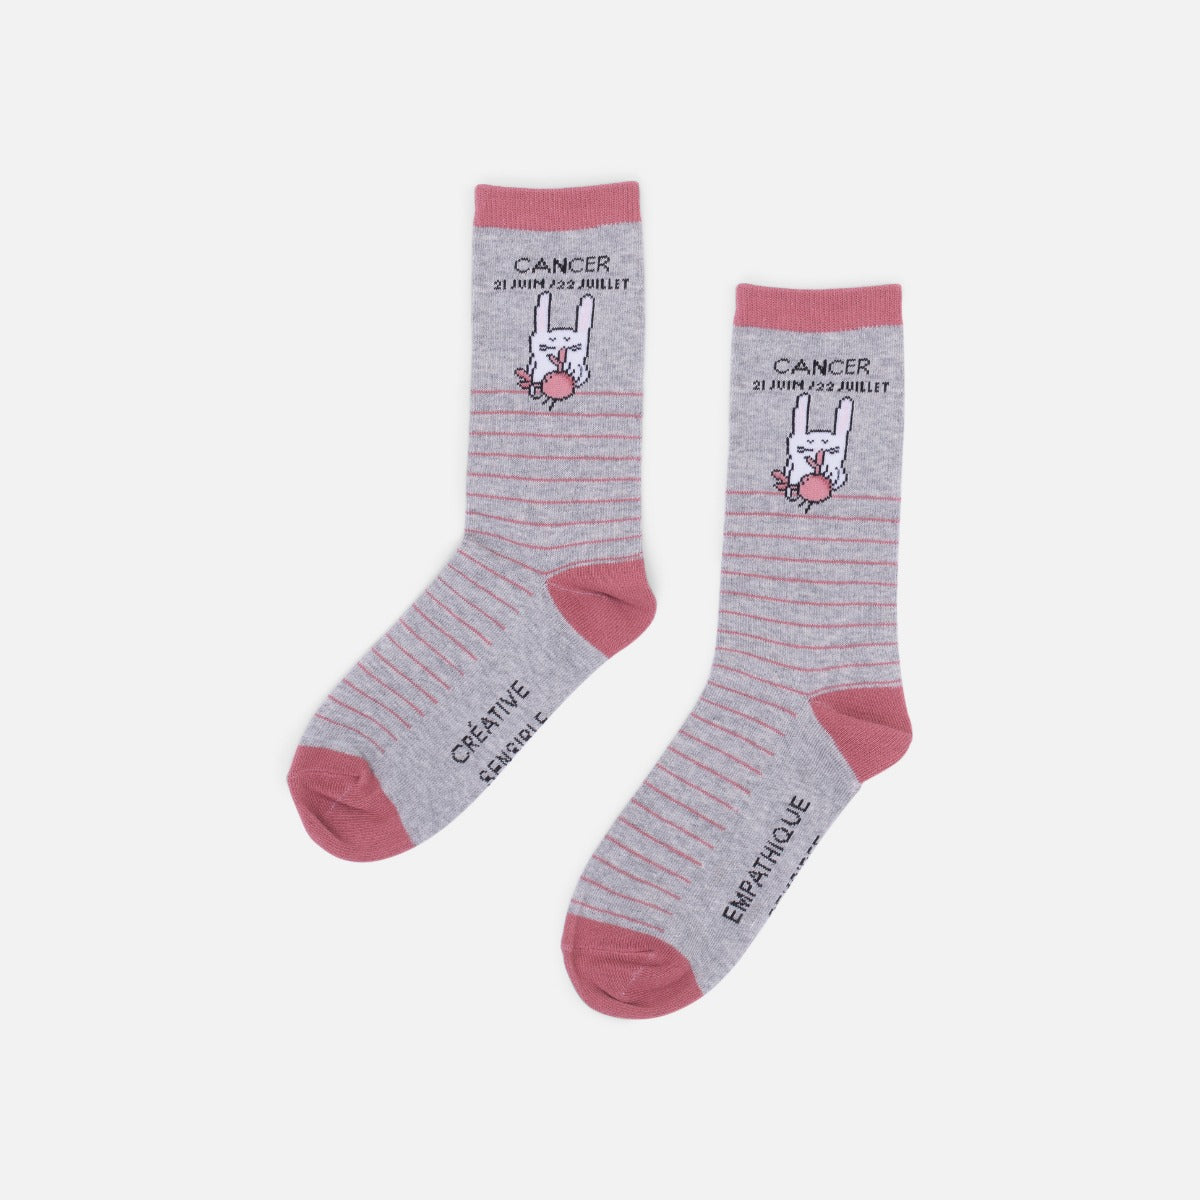 Grey and pink socks astrological sign "cancer"